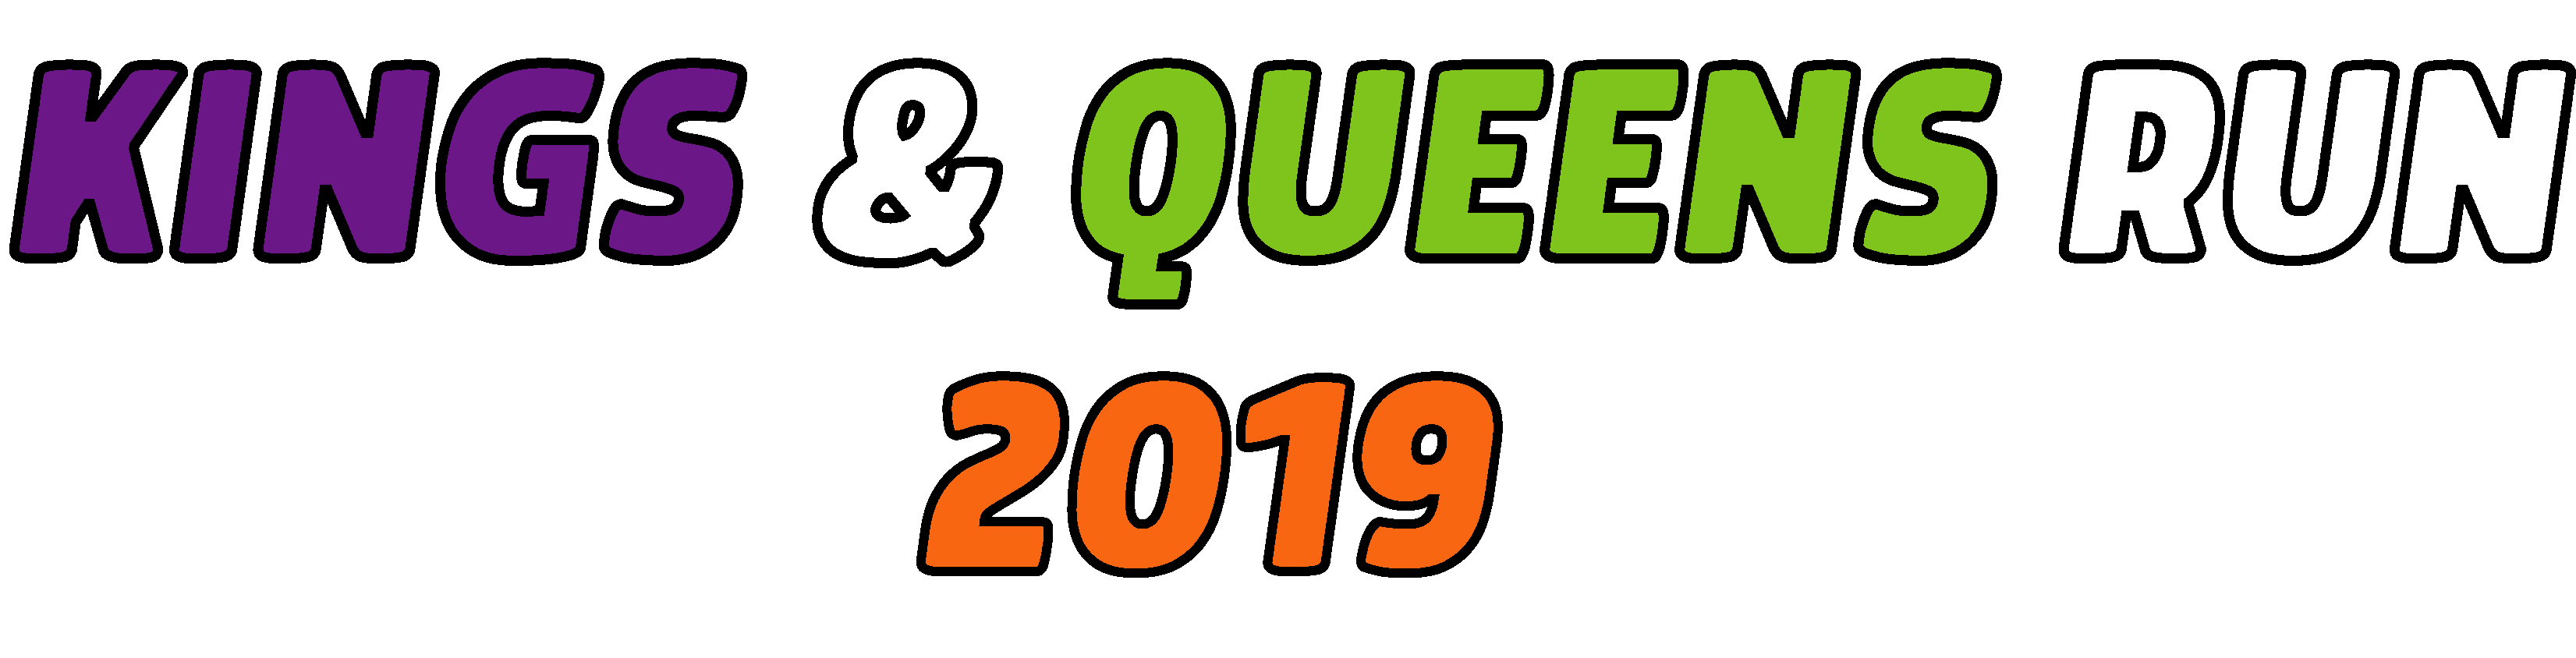 Kings and Queens run op 27-04-2019